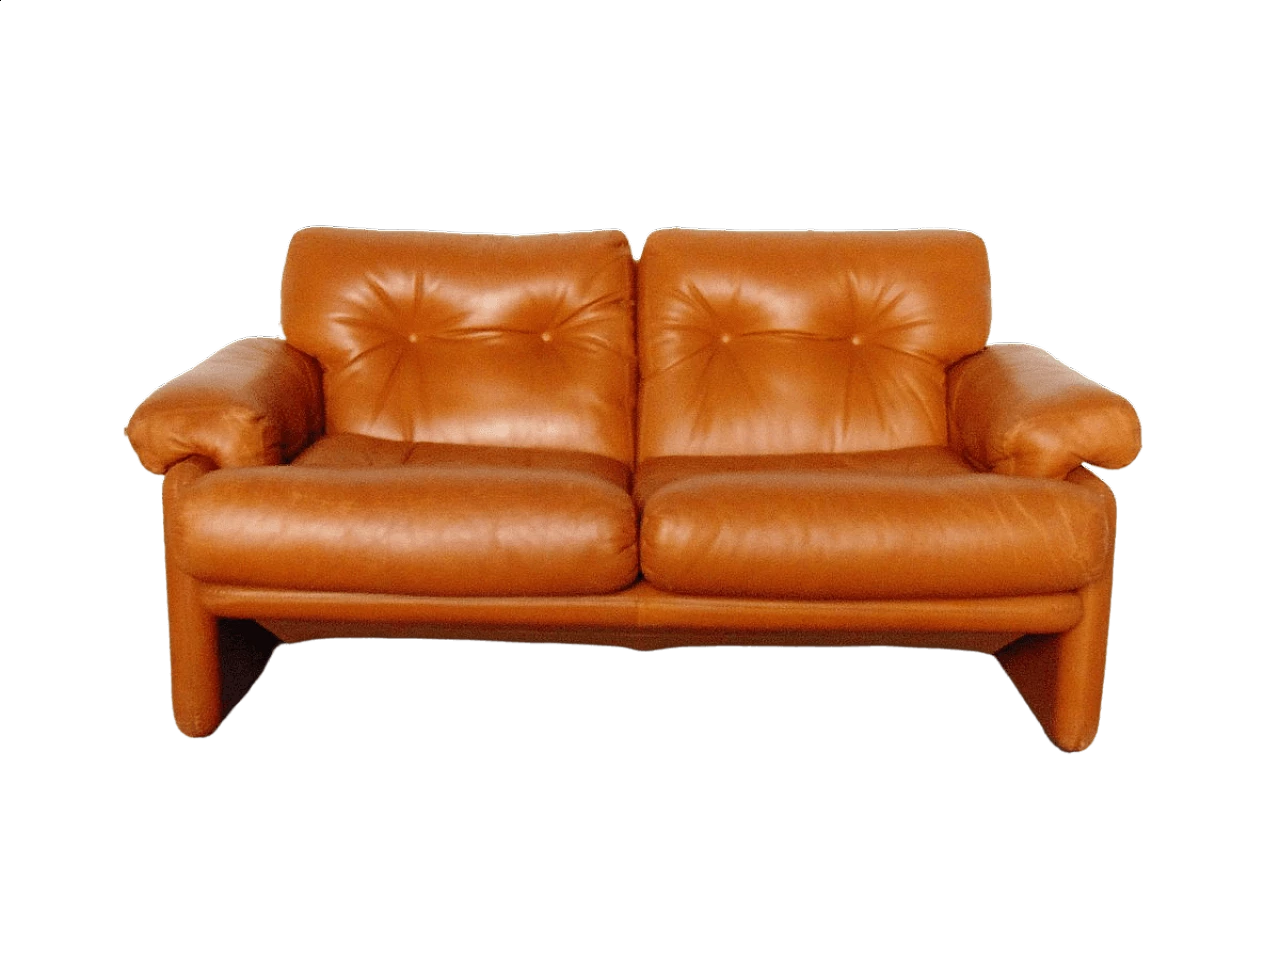 Coronado leather sofa by Tobia Scarpa for B&B Italia, 1970s 1471040